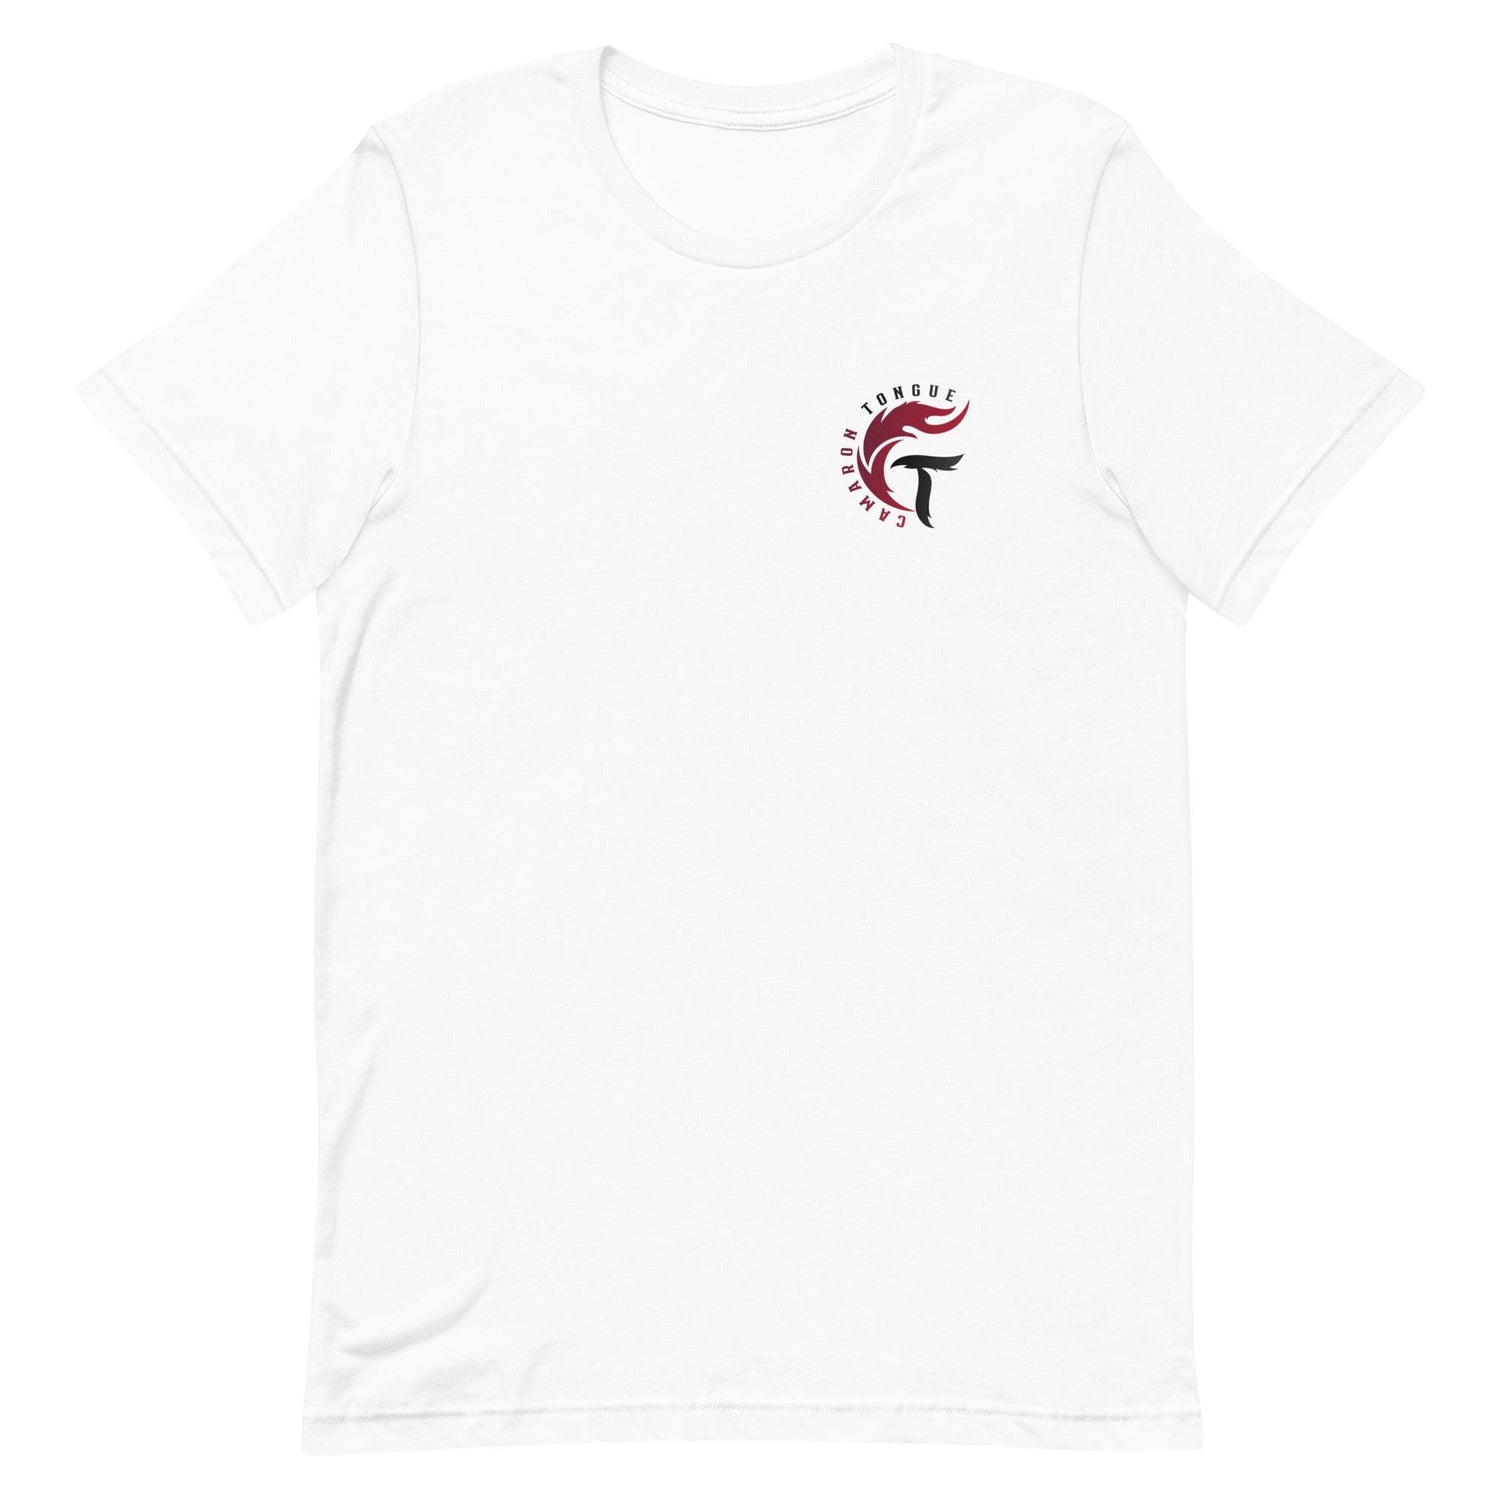 Camaron Tongue "Signature" t-shirt - Fan Arch